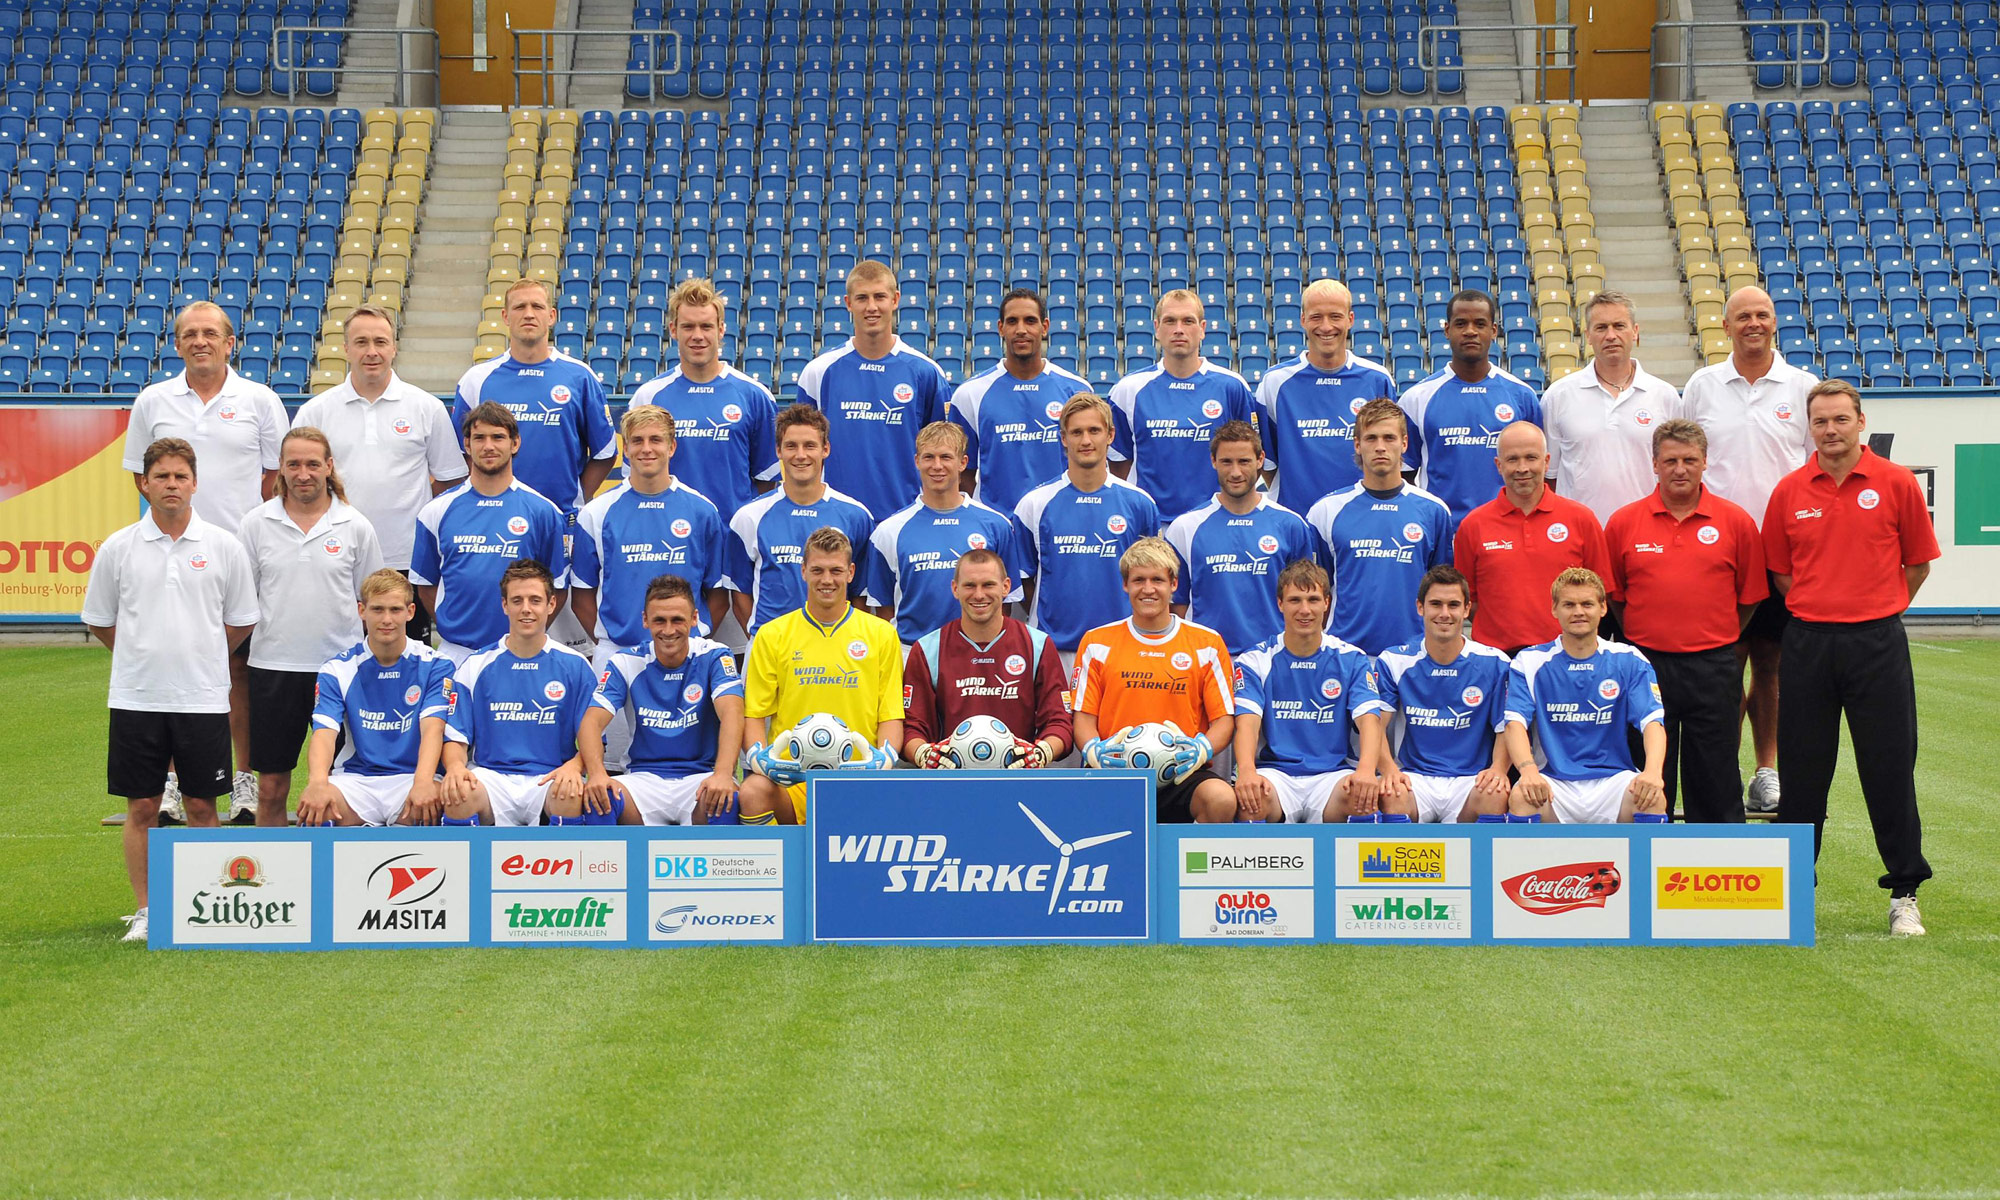 Mannschaftsfoto des FC Hansa Rostock 2009/2010 mit Sponsor Windstärke11